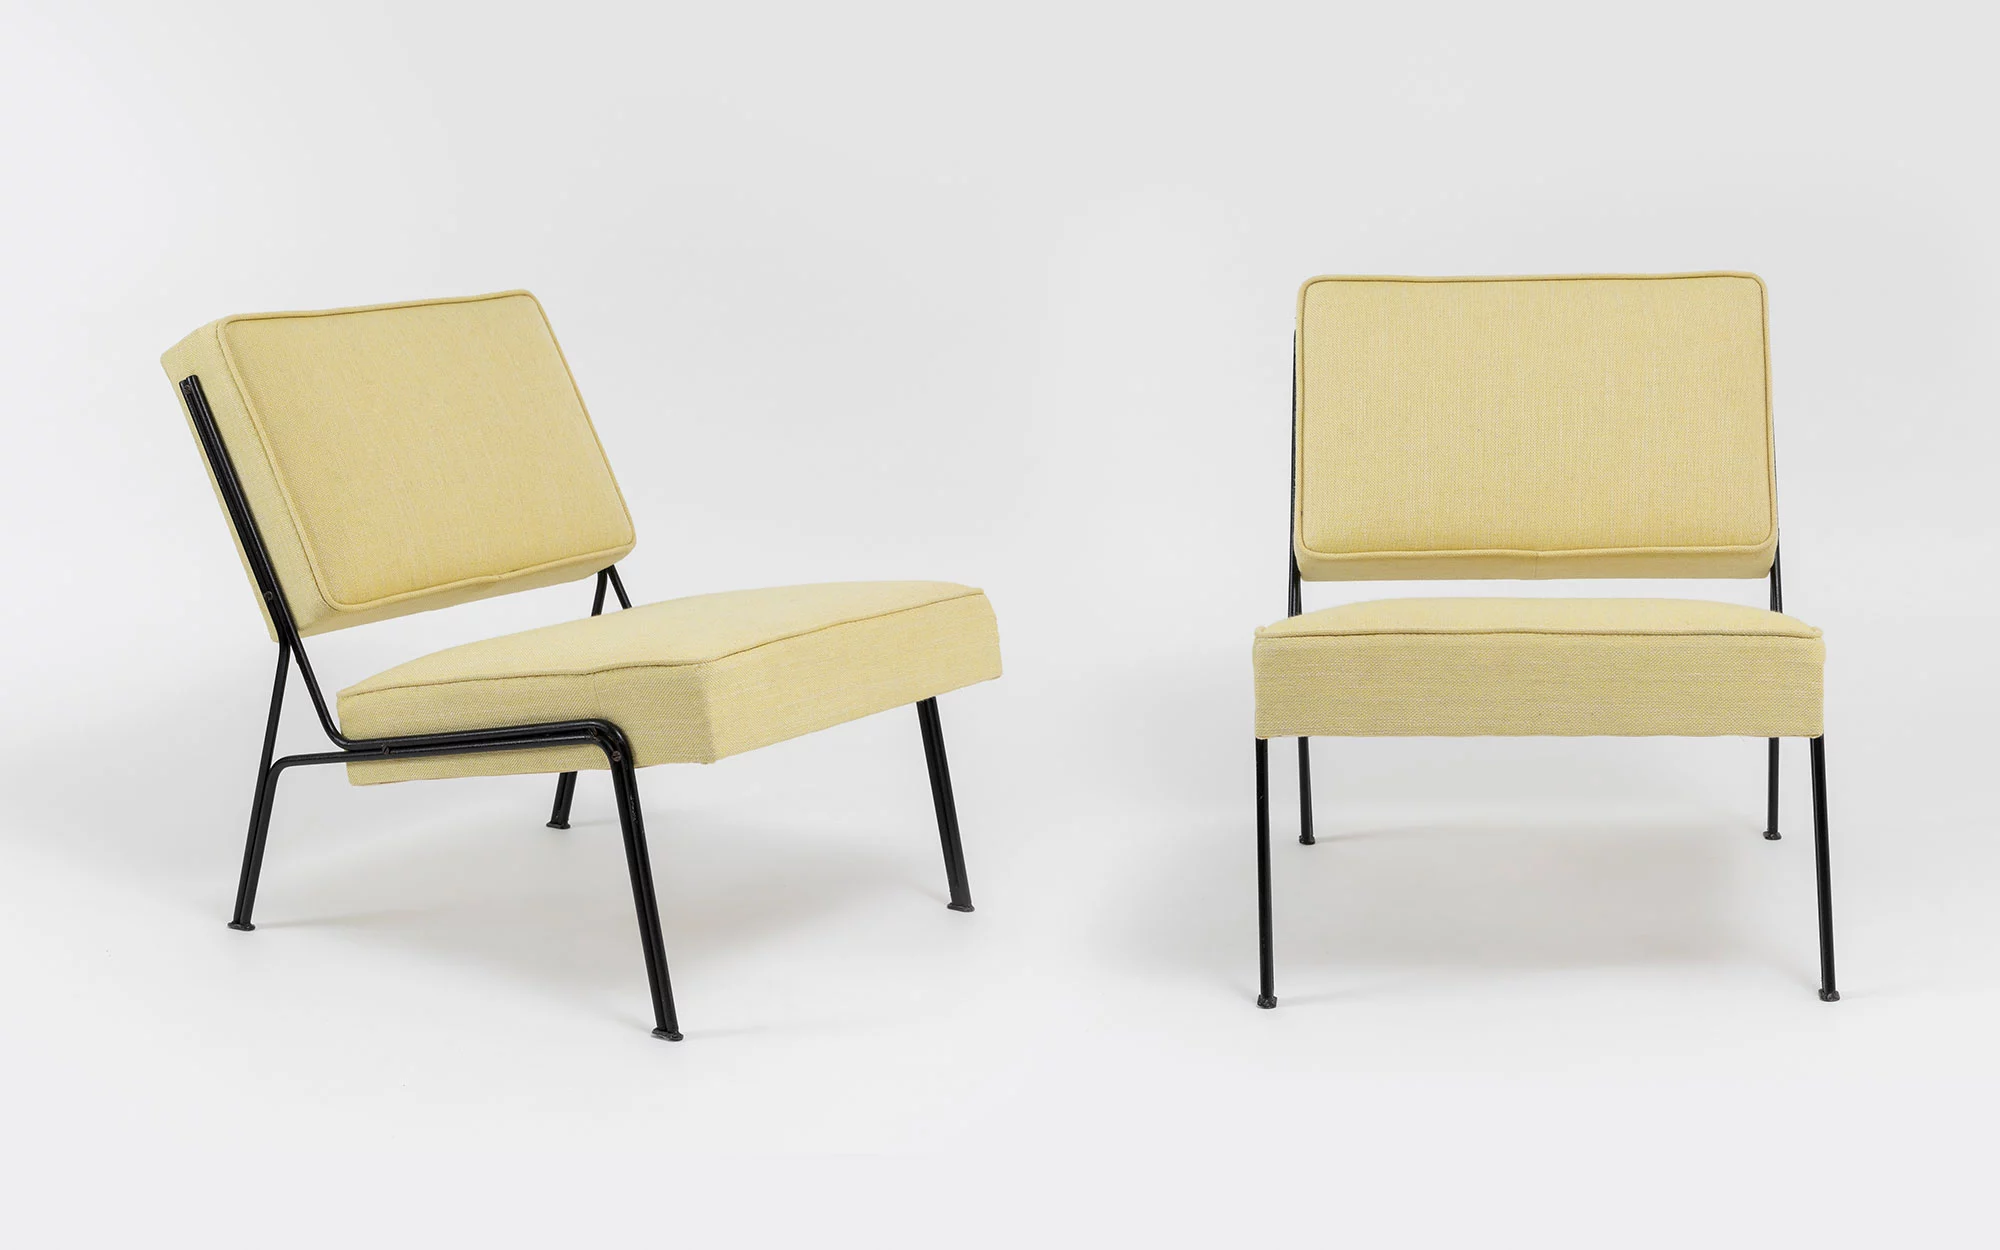 854 -  A.R.P - seating armchair- Galerie kreo